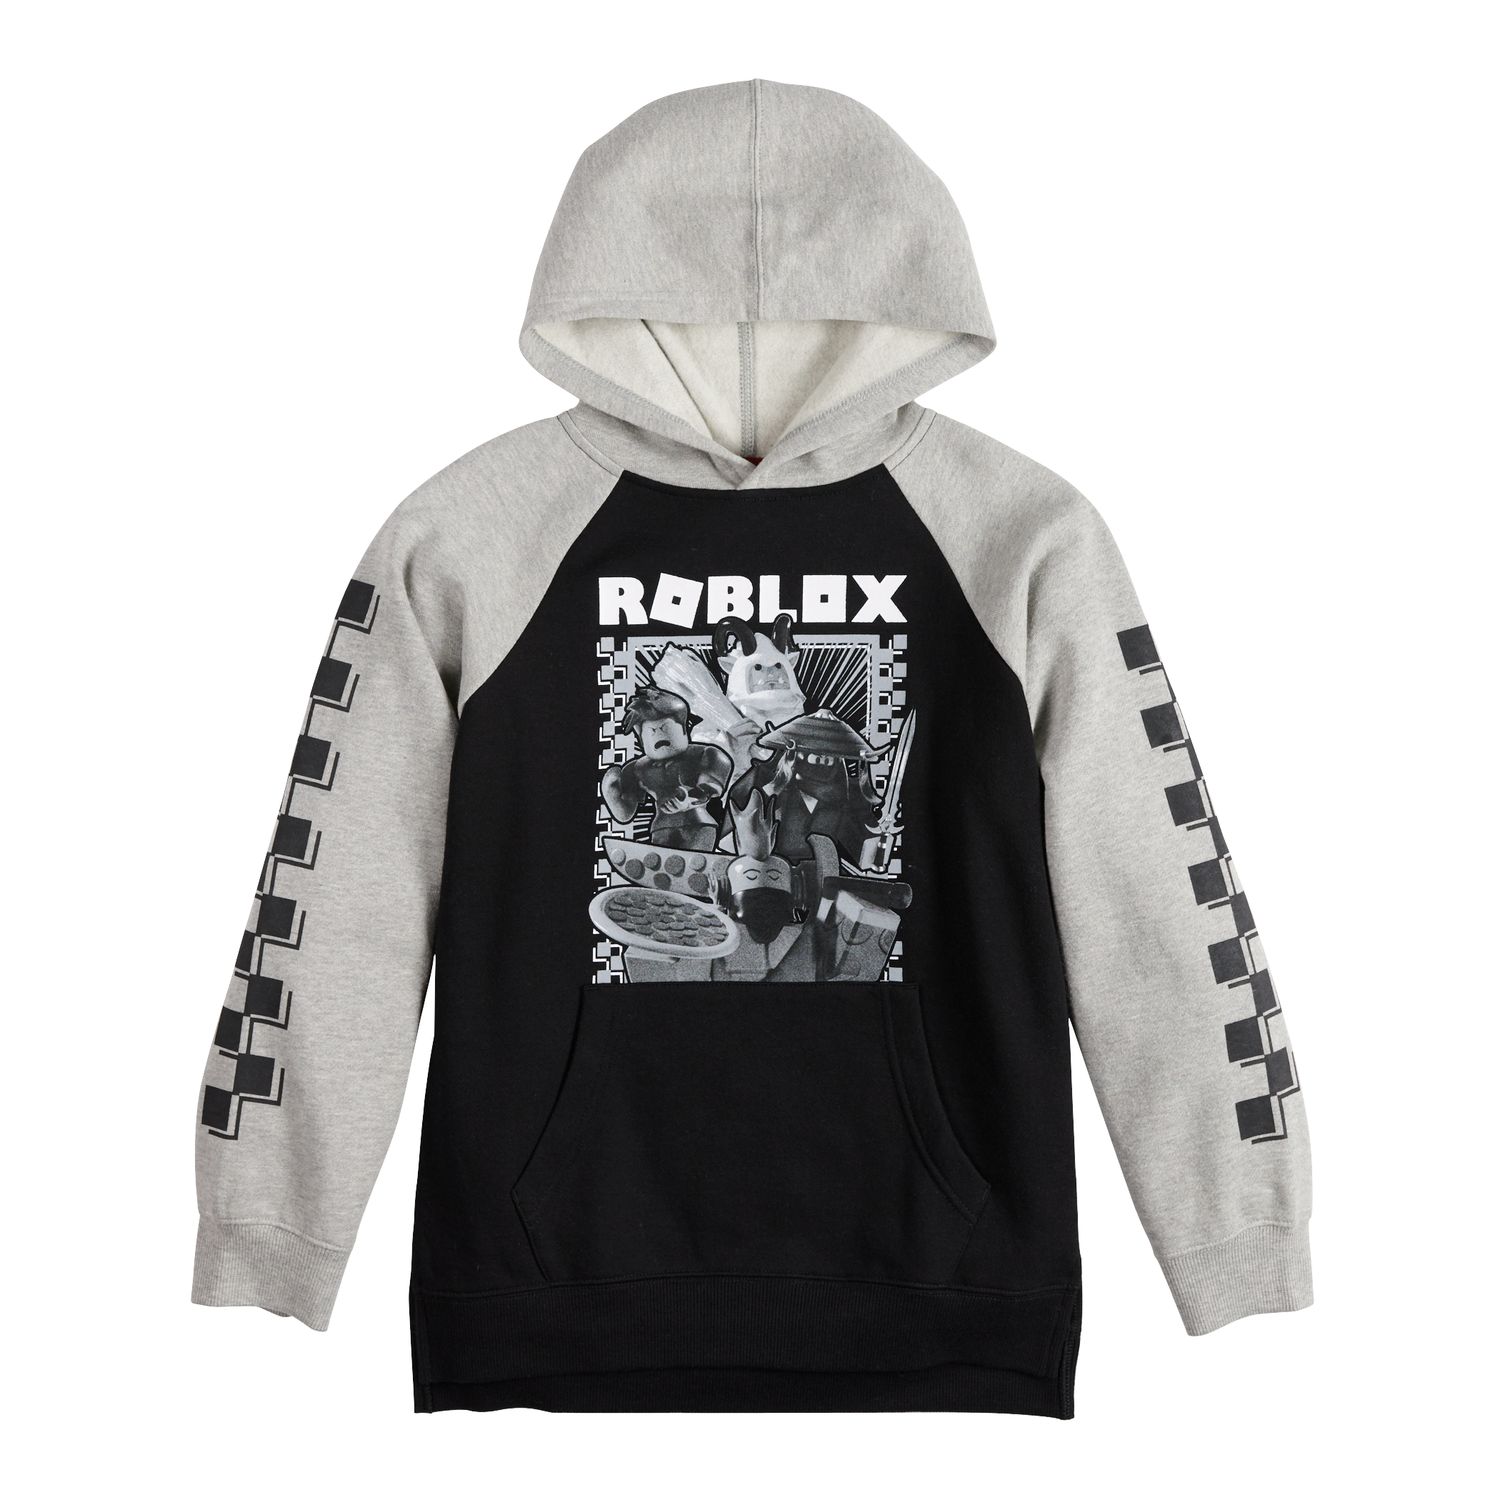 Black Sweatshirt Roblox Shop Clothing Shoes Online - black and white hoodie roblox